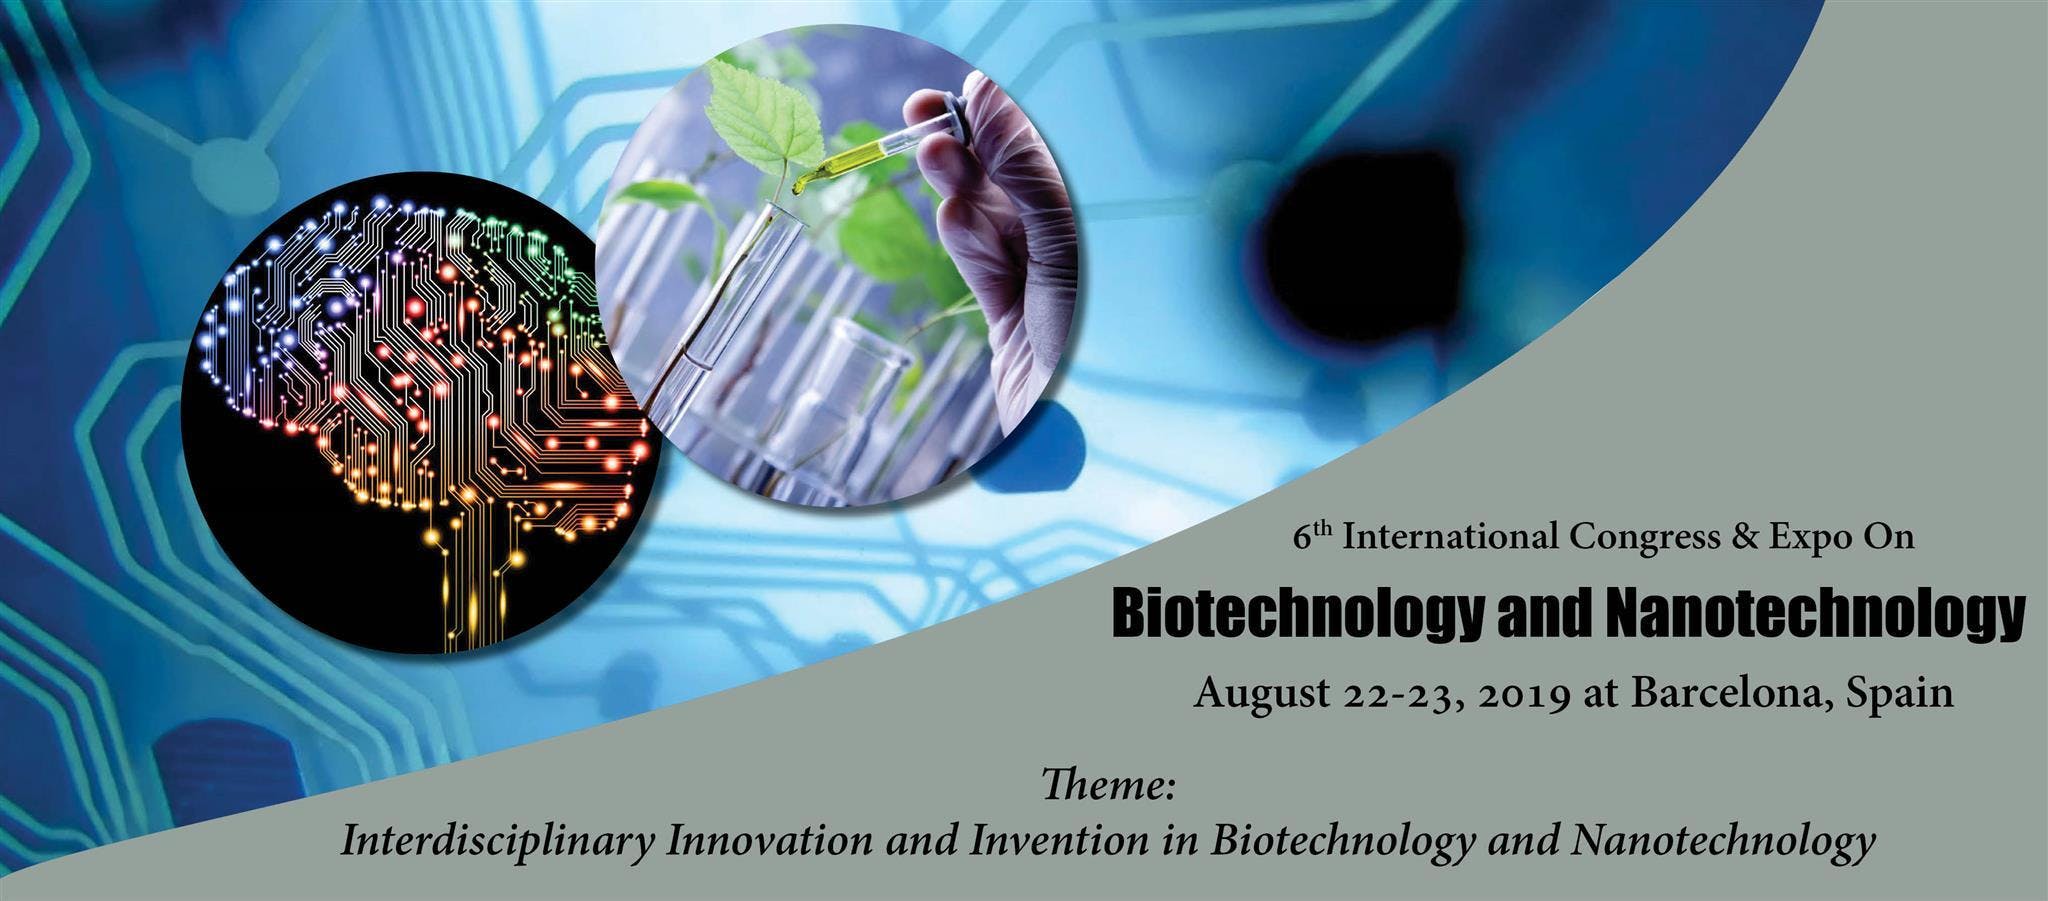 6th International Congress & Expo on Biotechnology and Nanotechnology